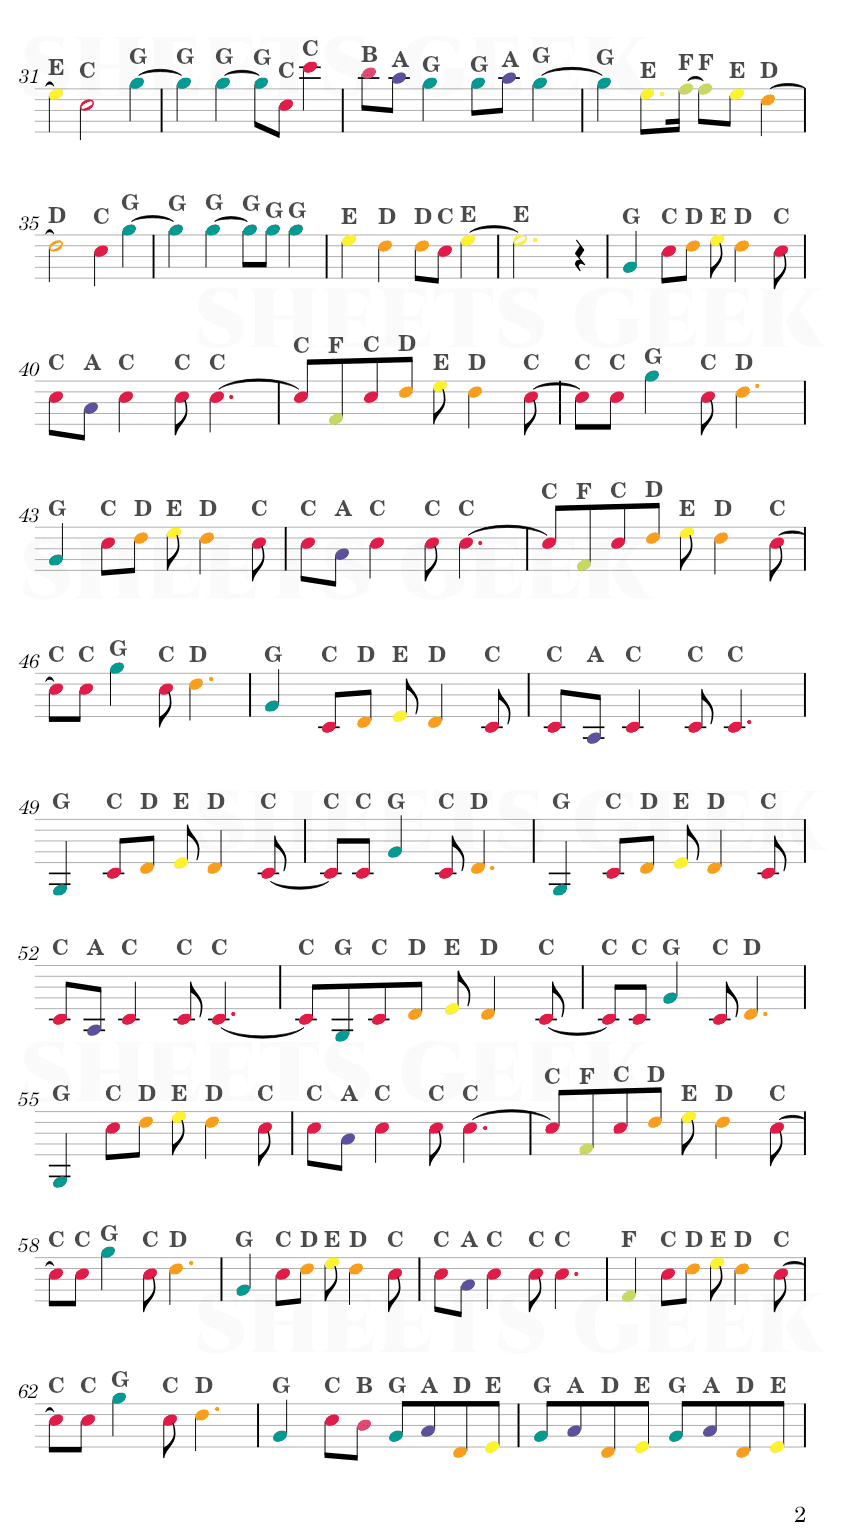 Kataware Doki - Kimi no na wa (Your Name) Easy Sheet Music Free for piano, keyboard, flute, violin, sax, cello page 2